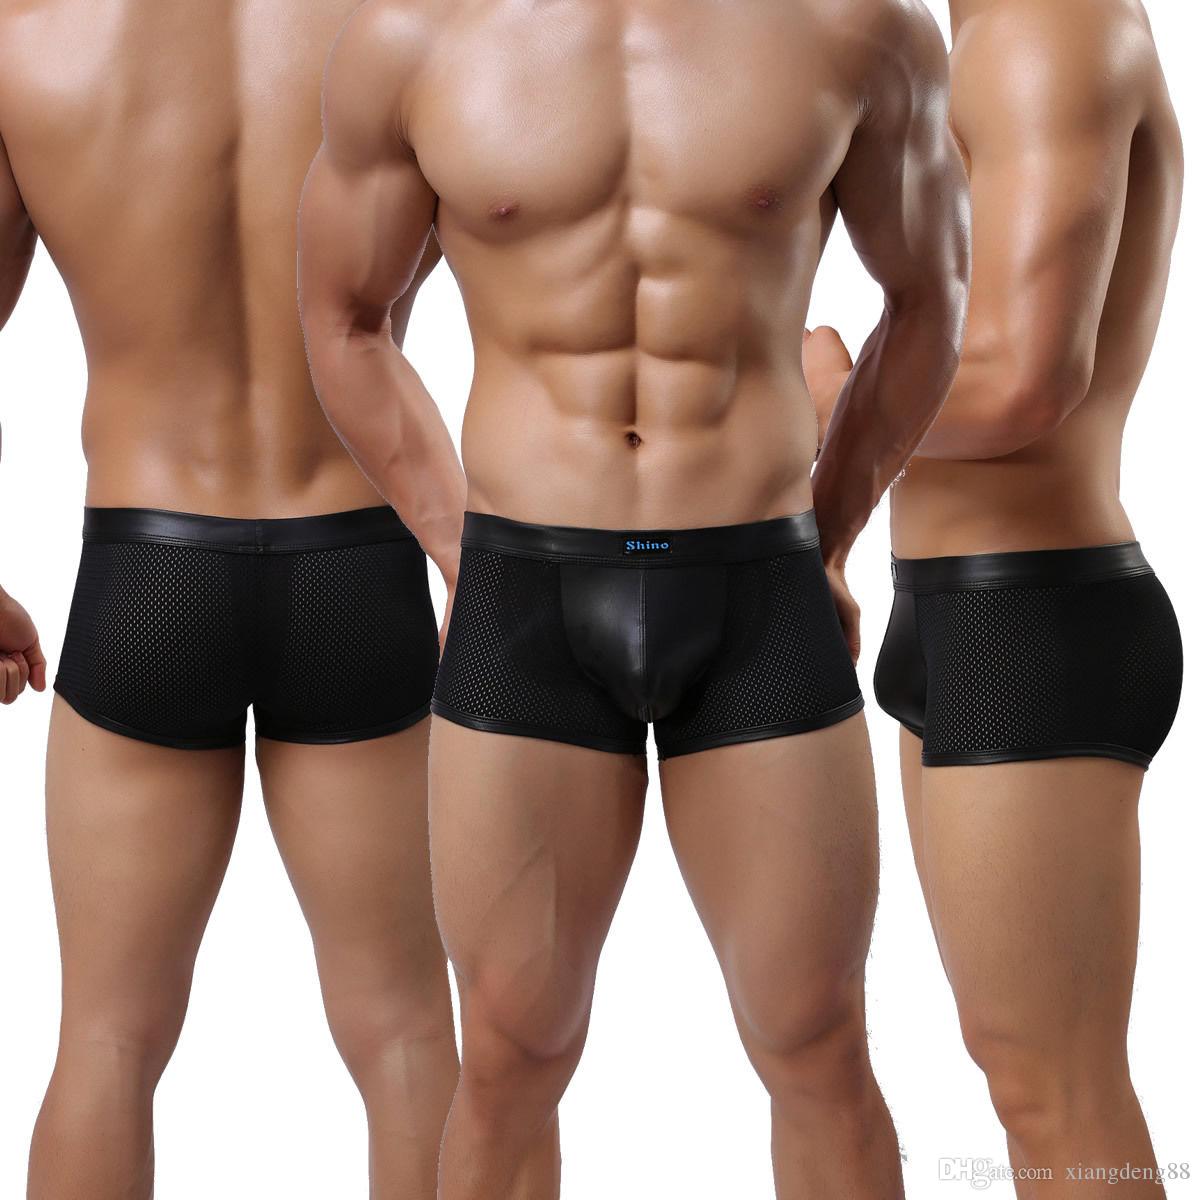 Bulging fetish in man shorts site